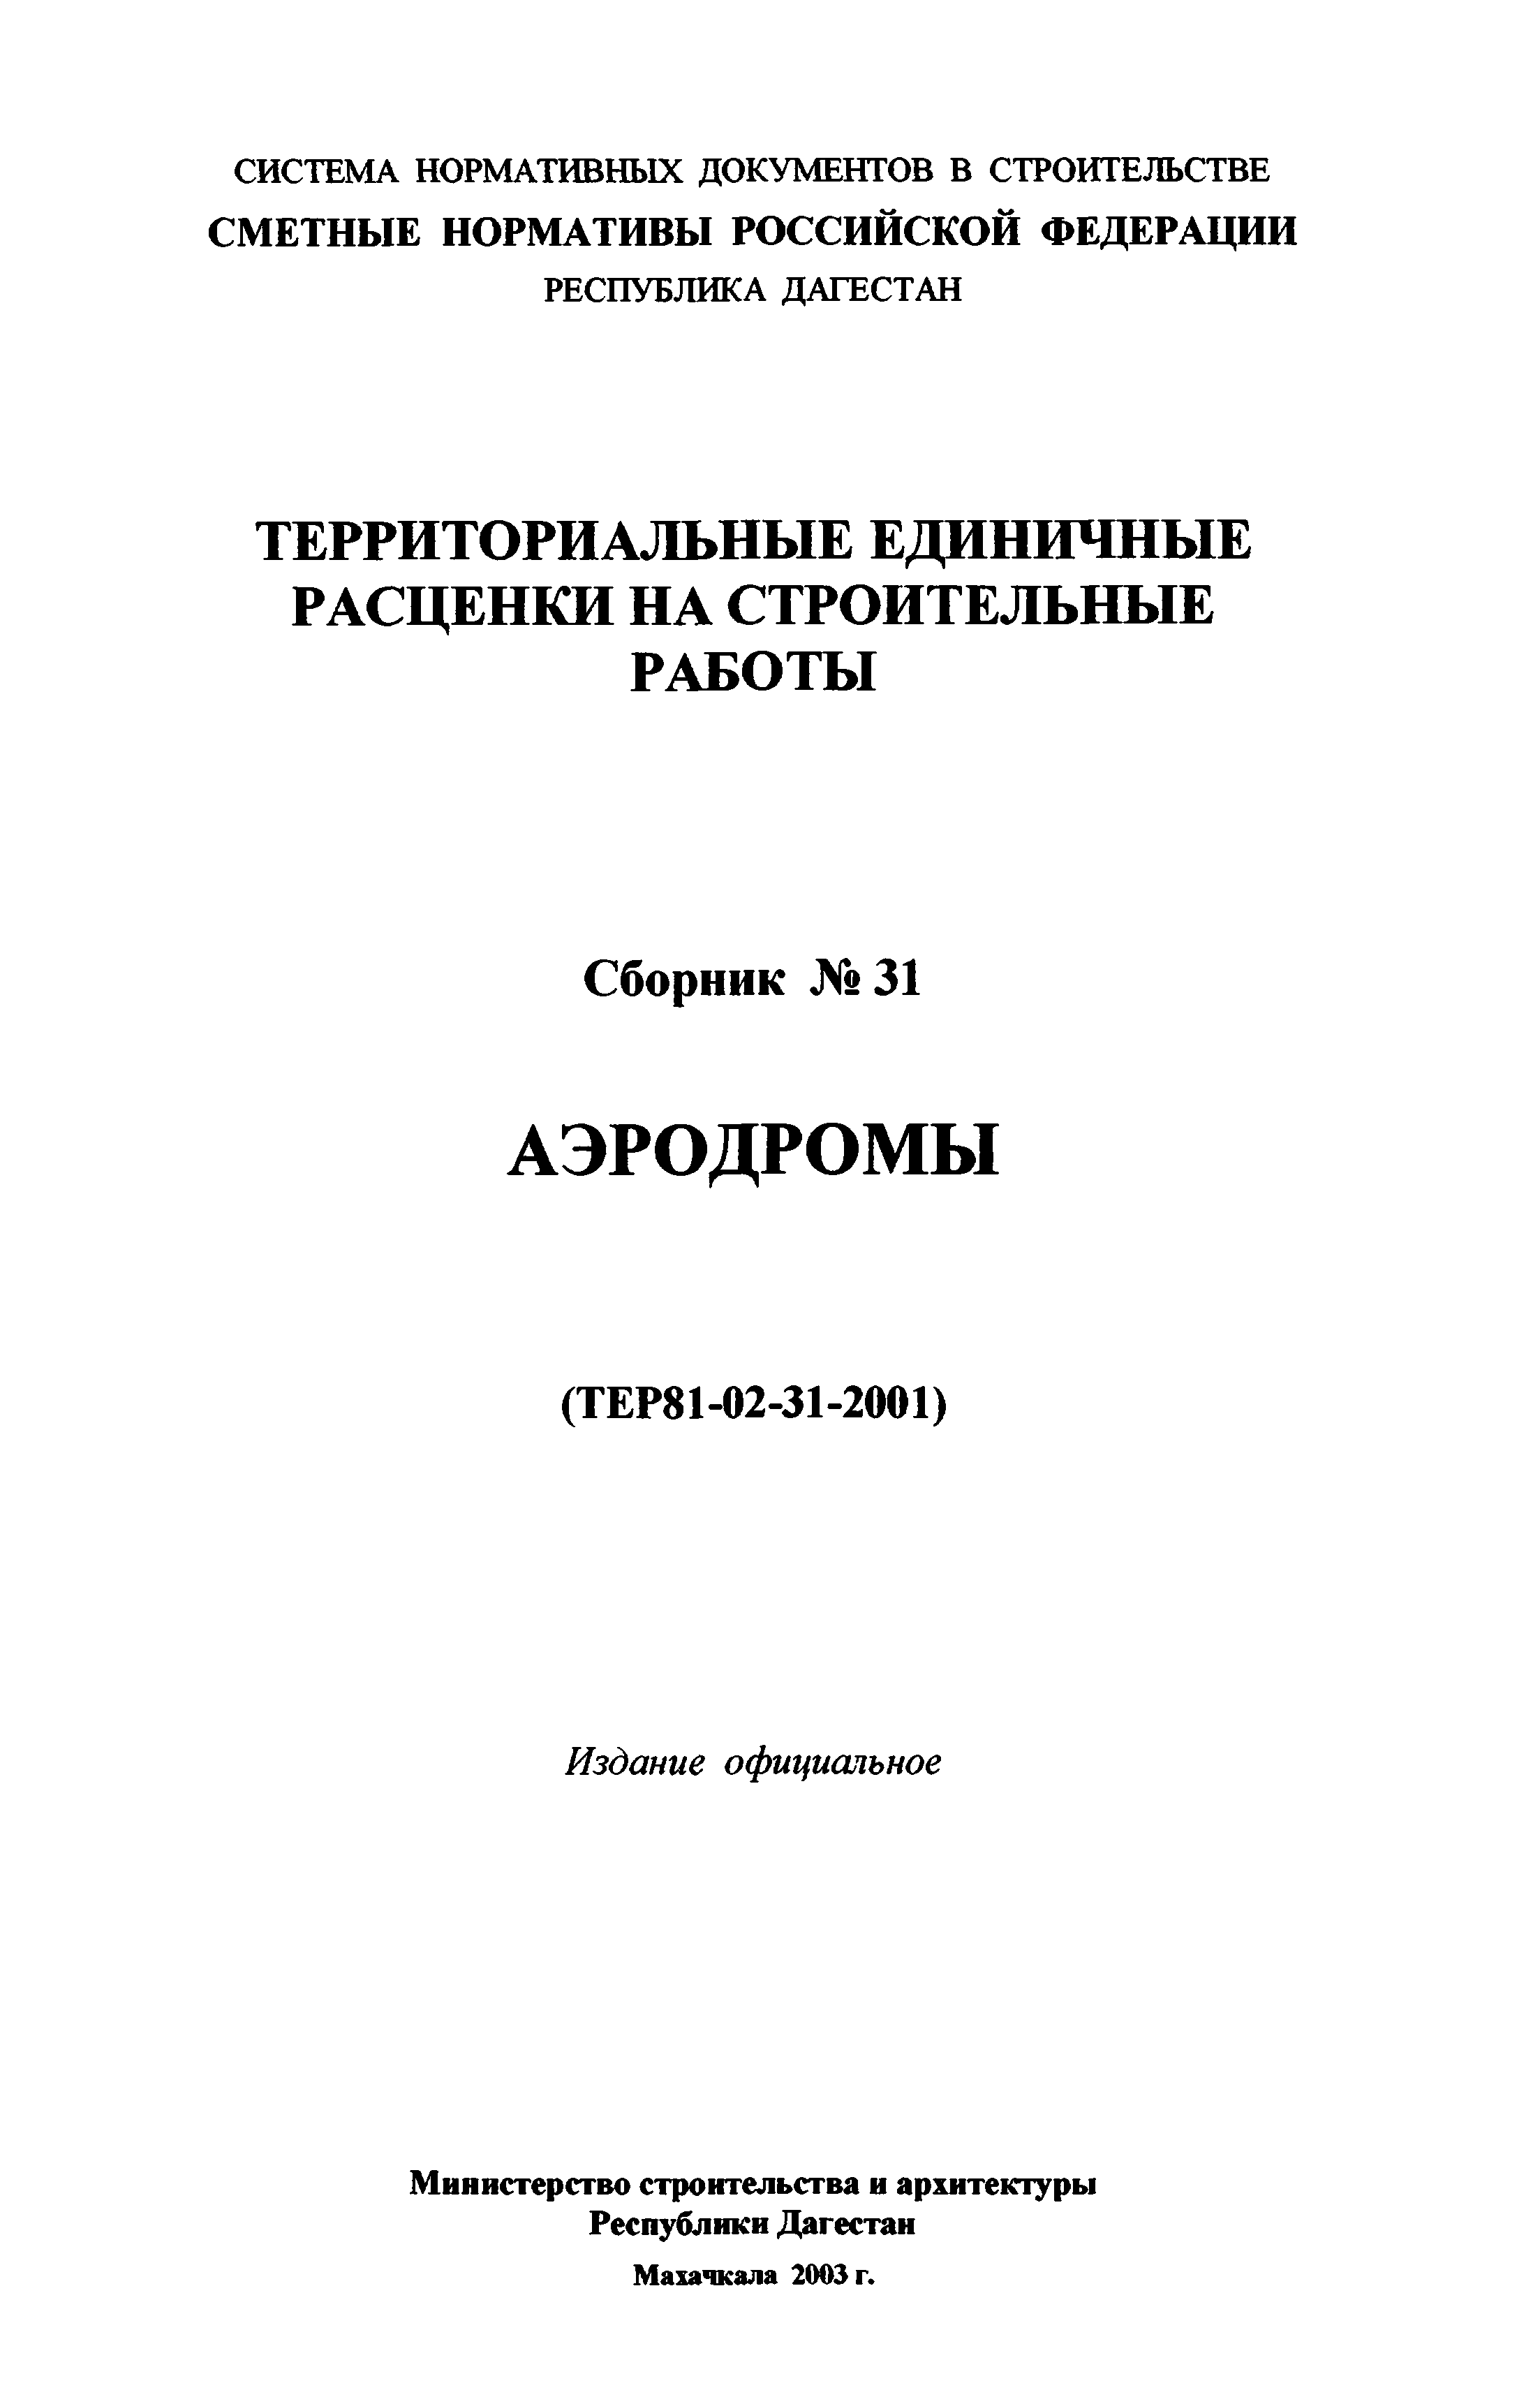 ТЕР Республика Дагестан 2001-31